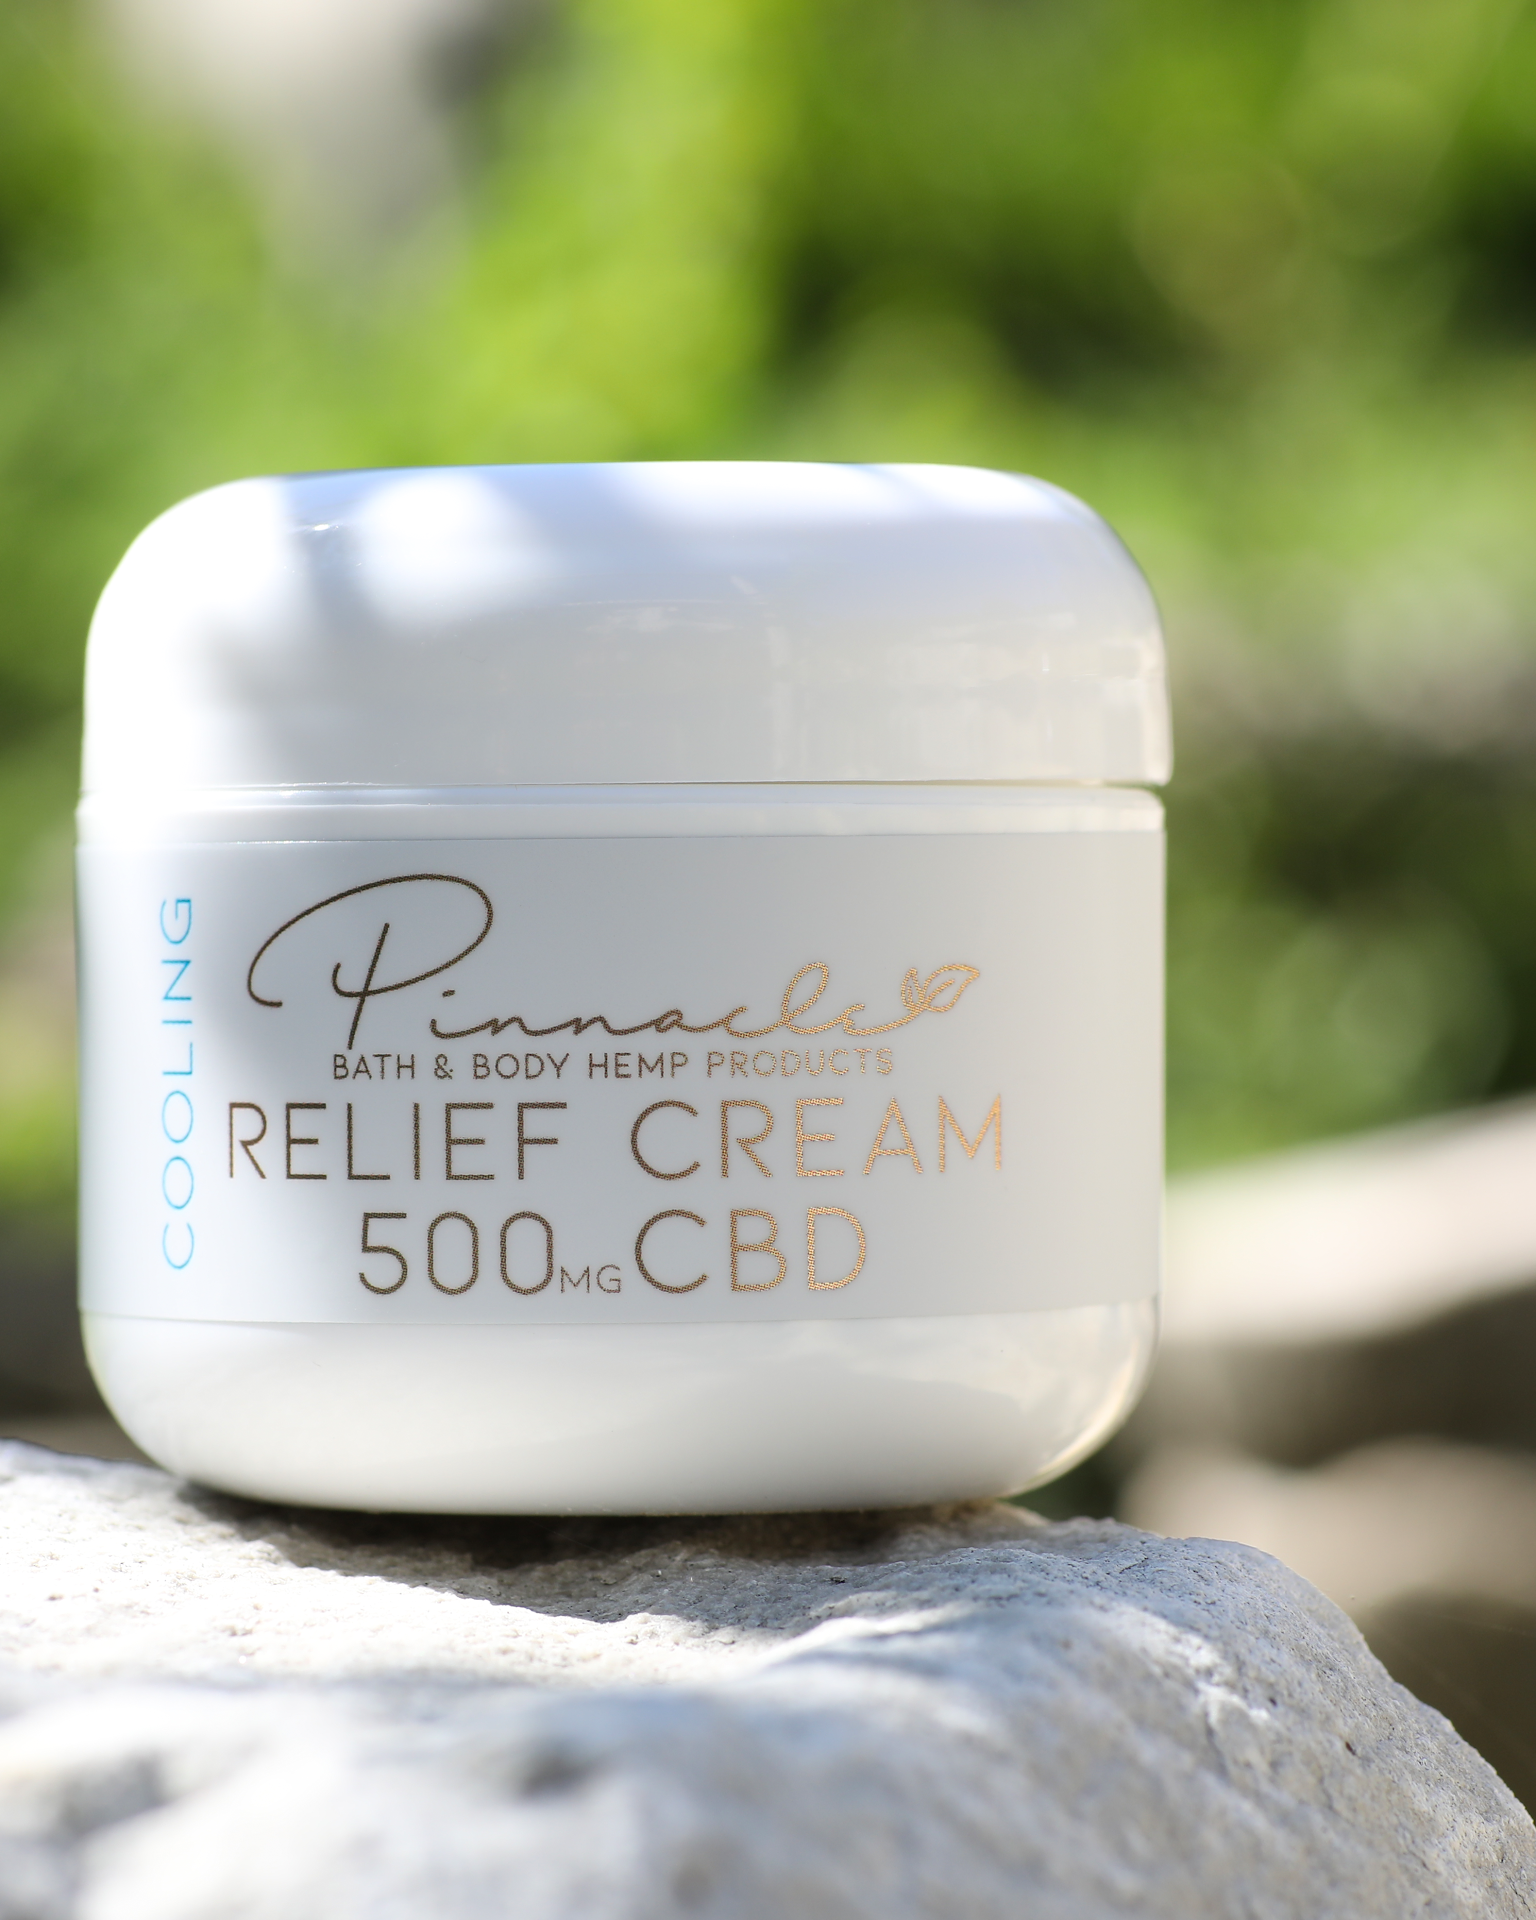 Pinnacle Relief Cream